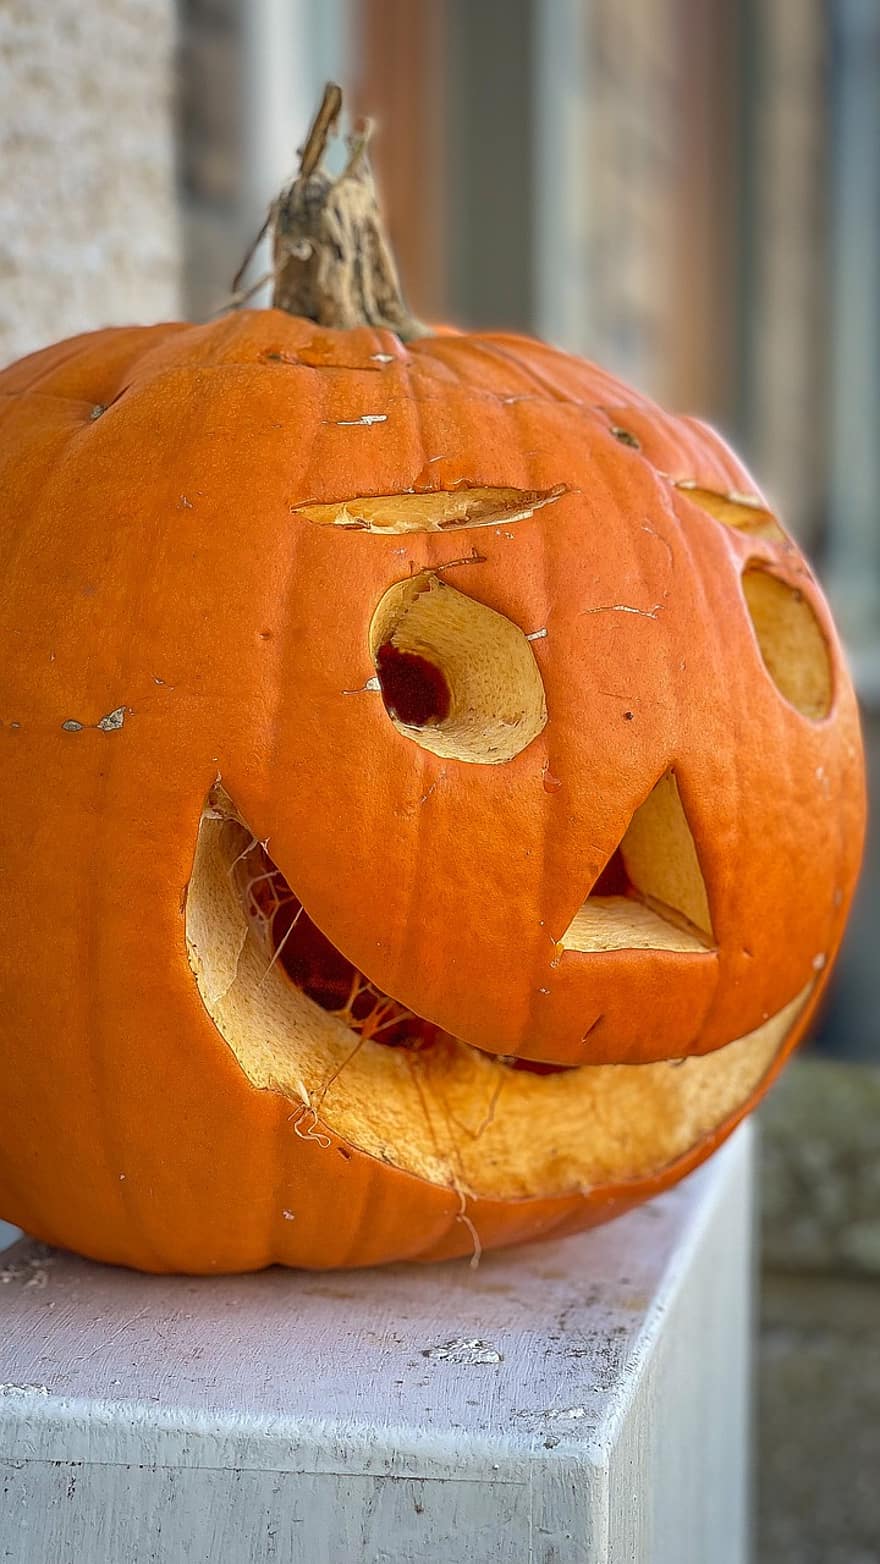 pompoen, halloween, spookachtig, eng, oktober, herfst, lantaarn, verschrikking, glimlachen, seizoen, groente